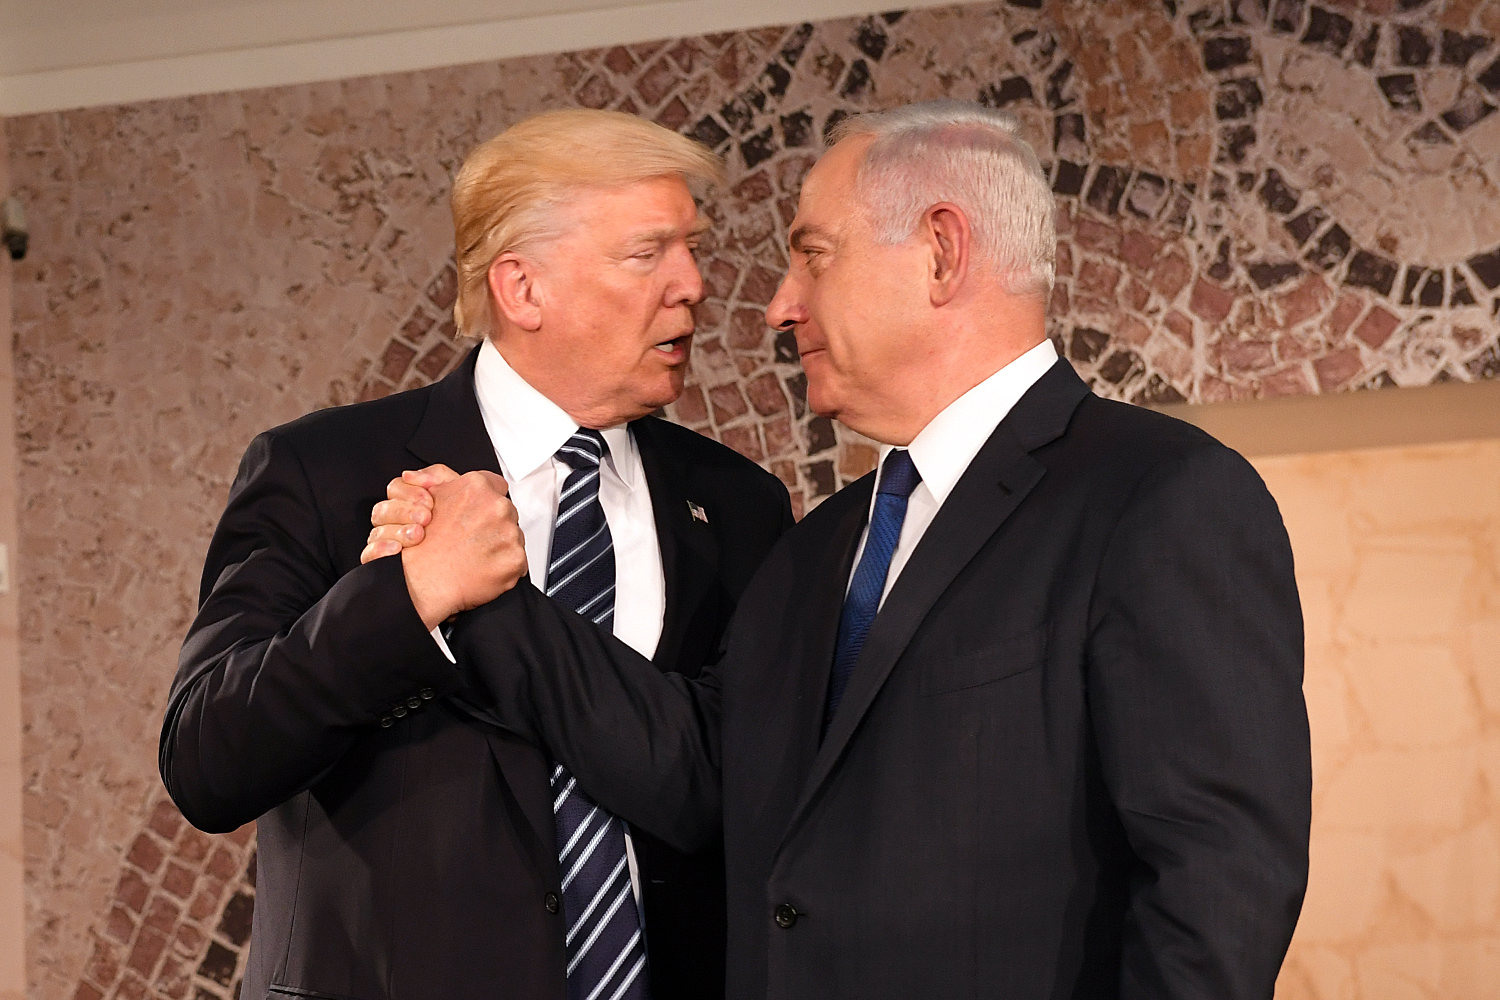 President Trump and PM Netanyahu